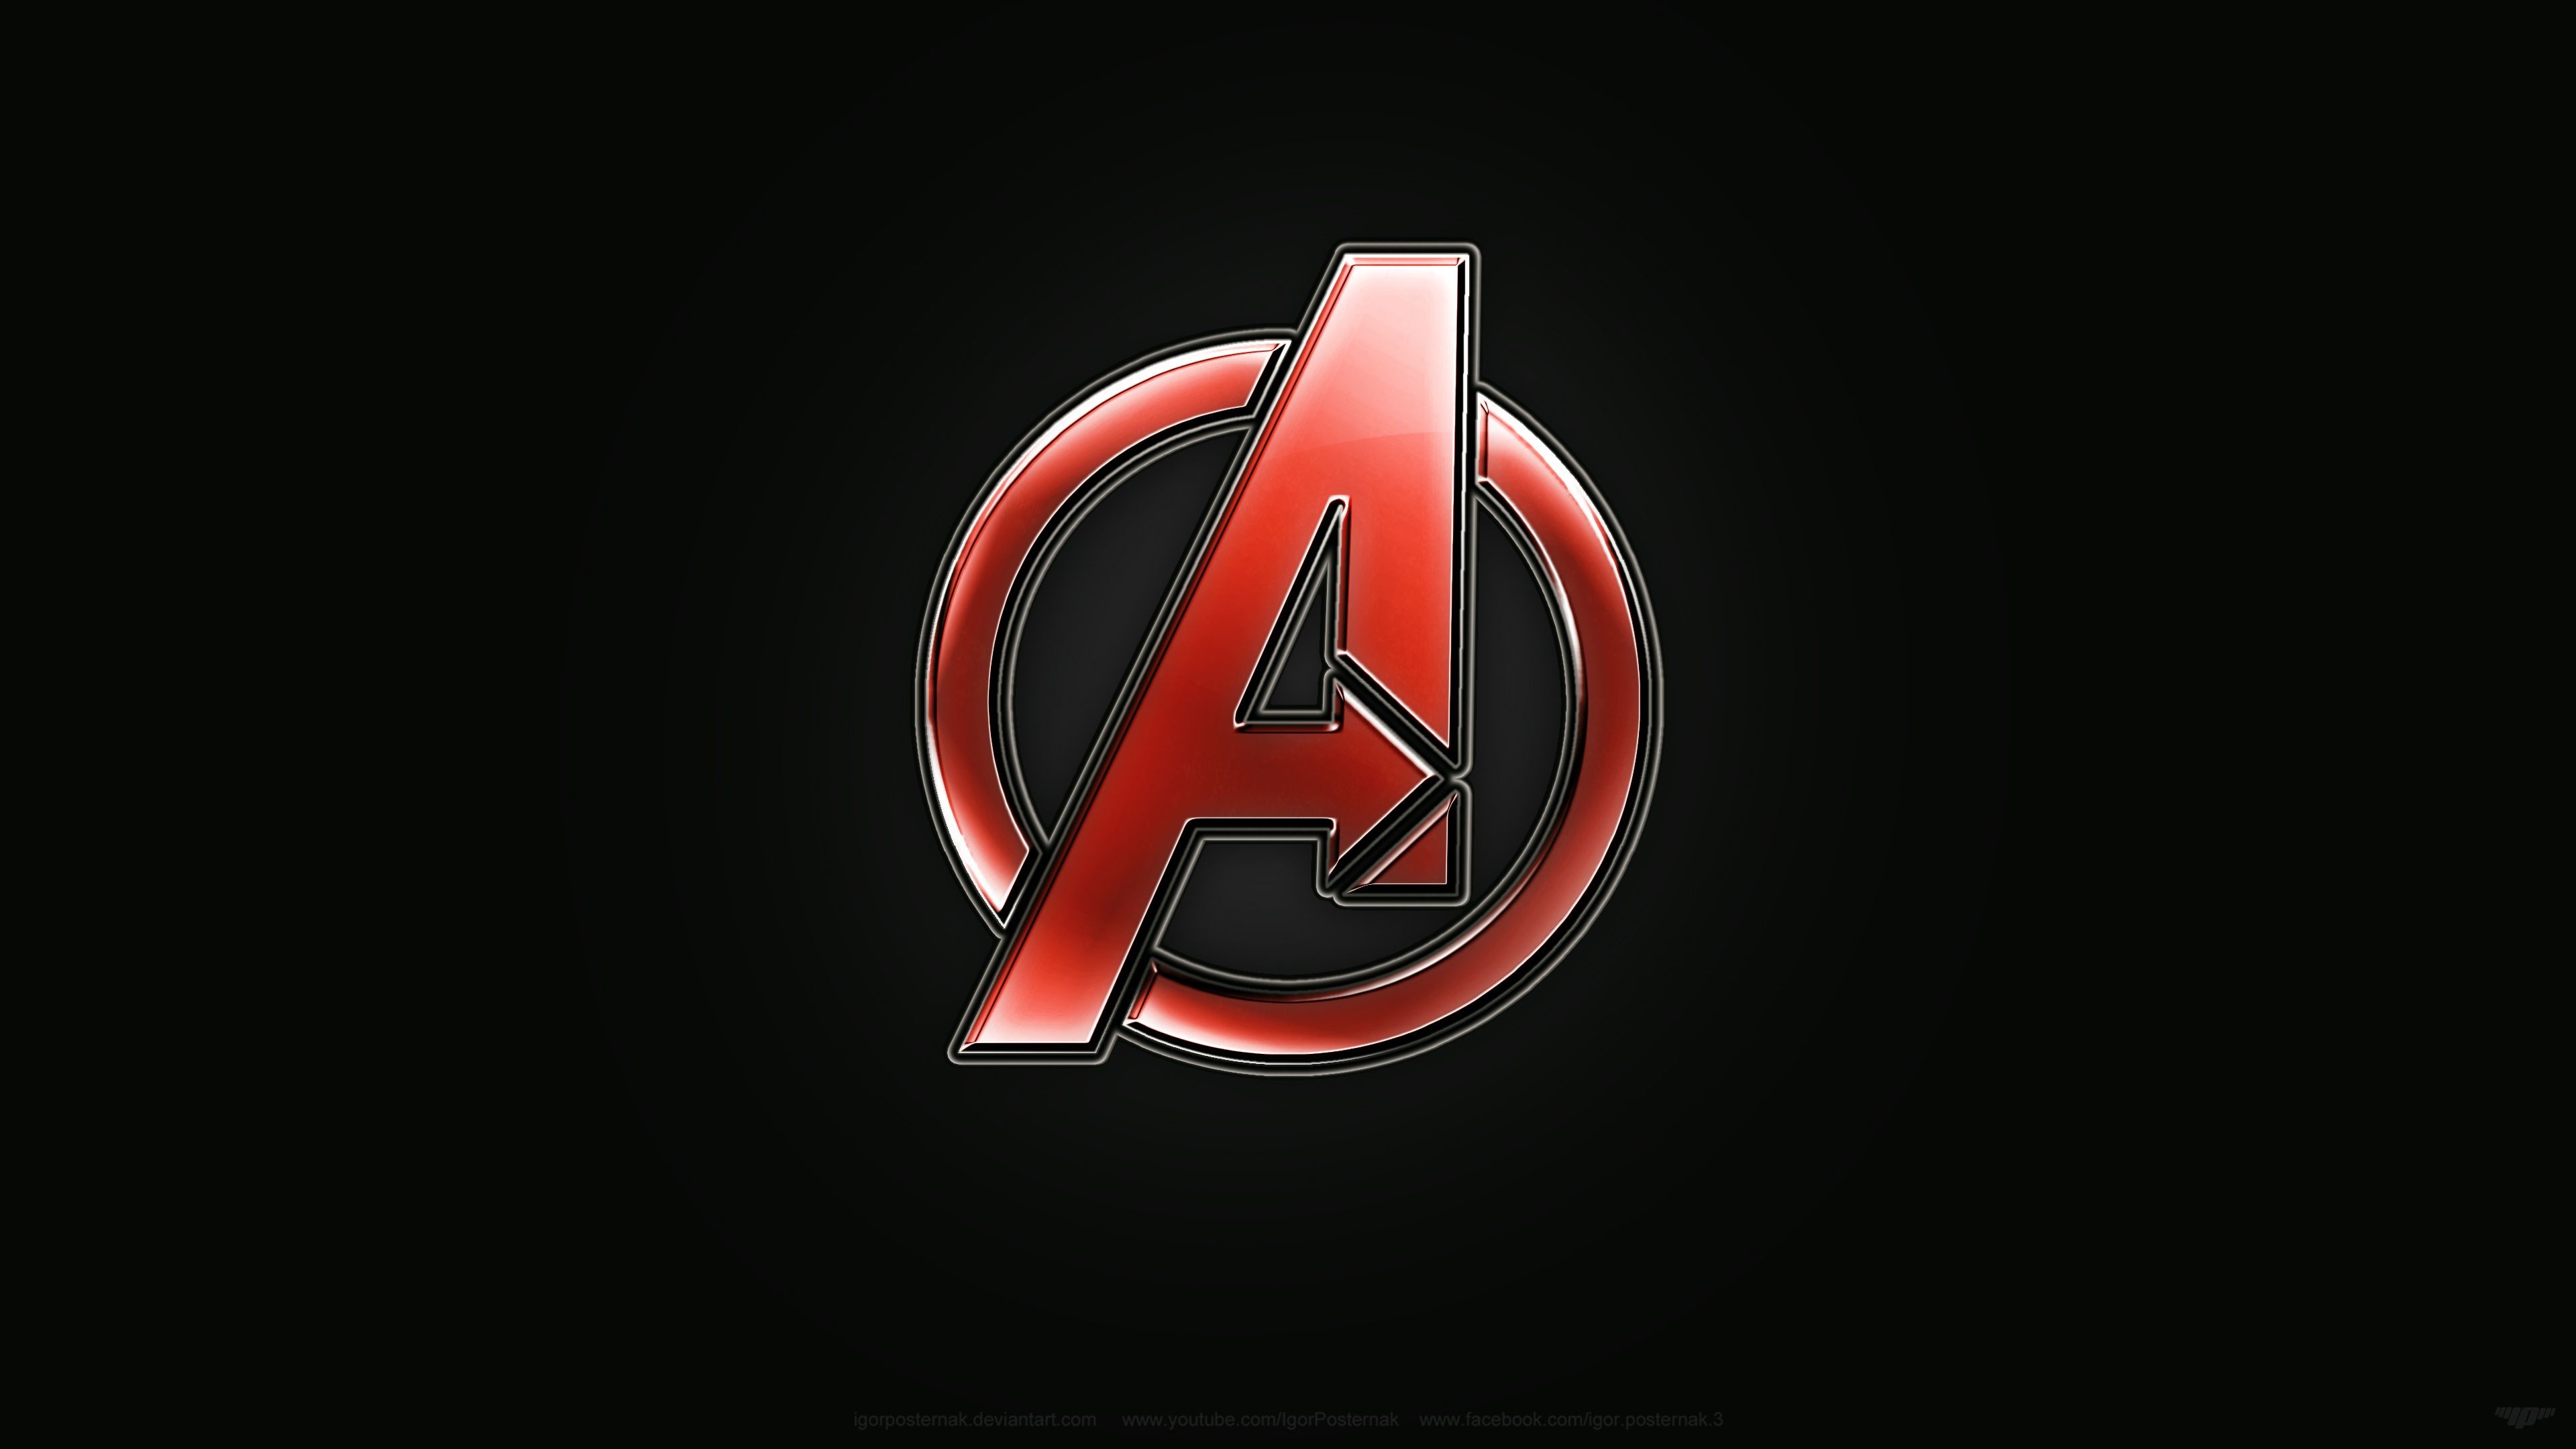 3840x2160 Avengers logo design by IgorPosternak.deviantart.com on @DeviantArt